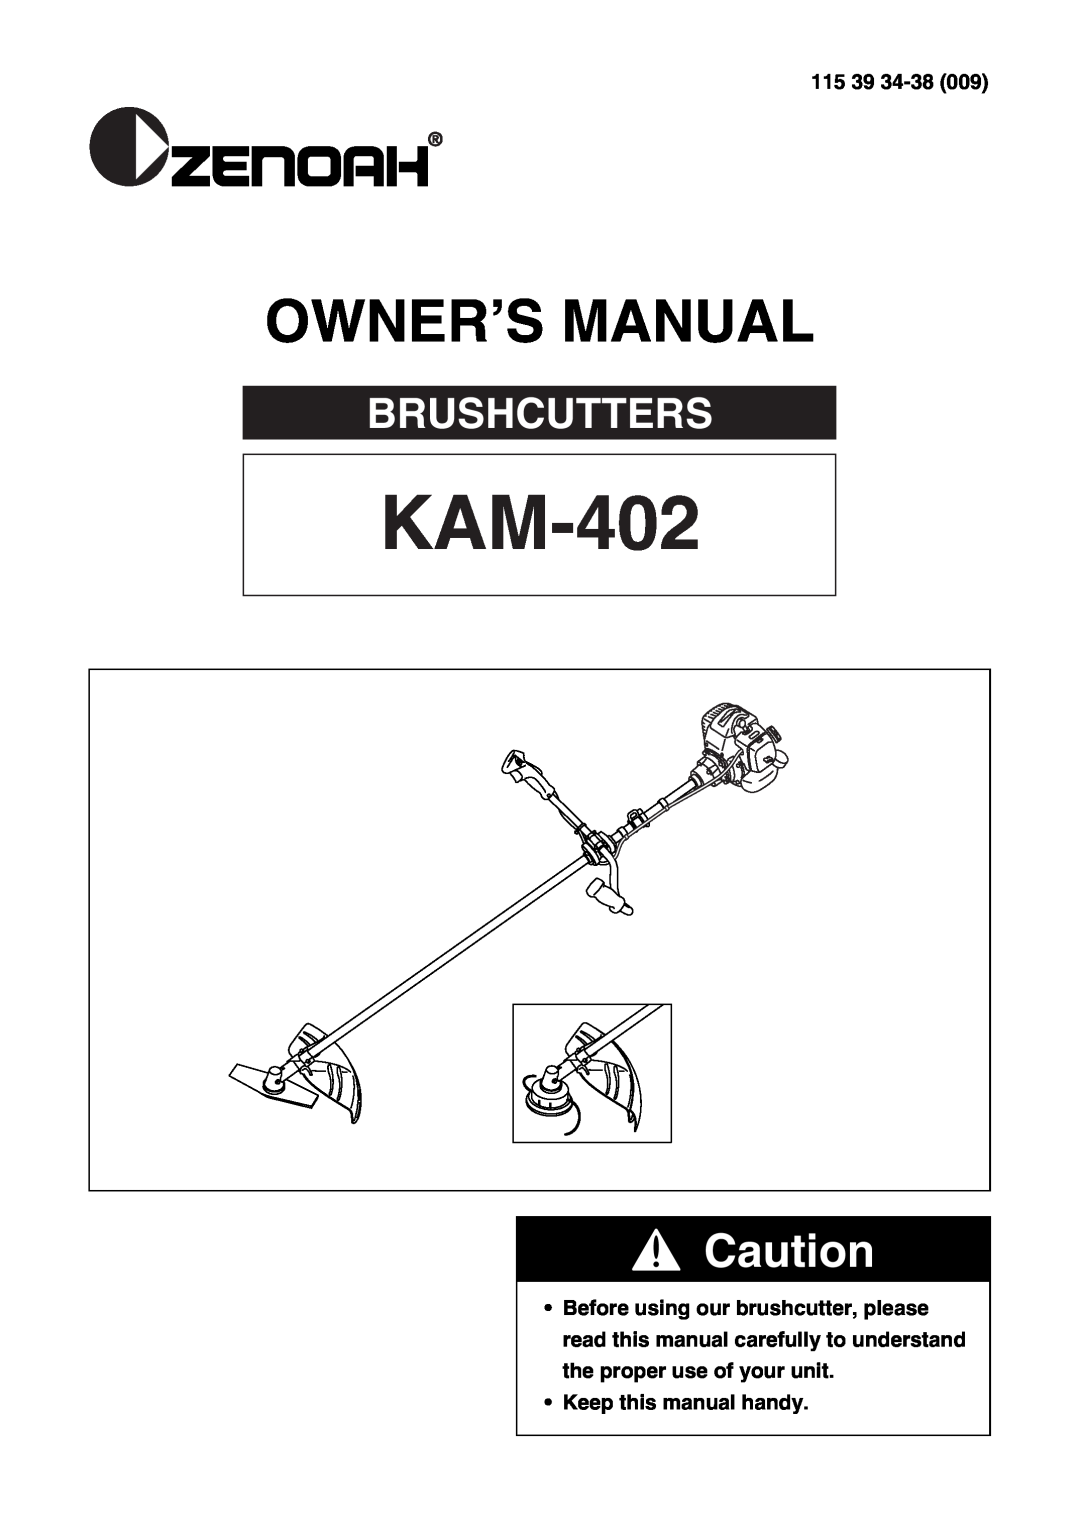 Zenoah KAM-402 owner manual Brushcutters, 115, Keep this manual handy 